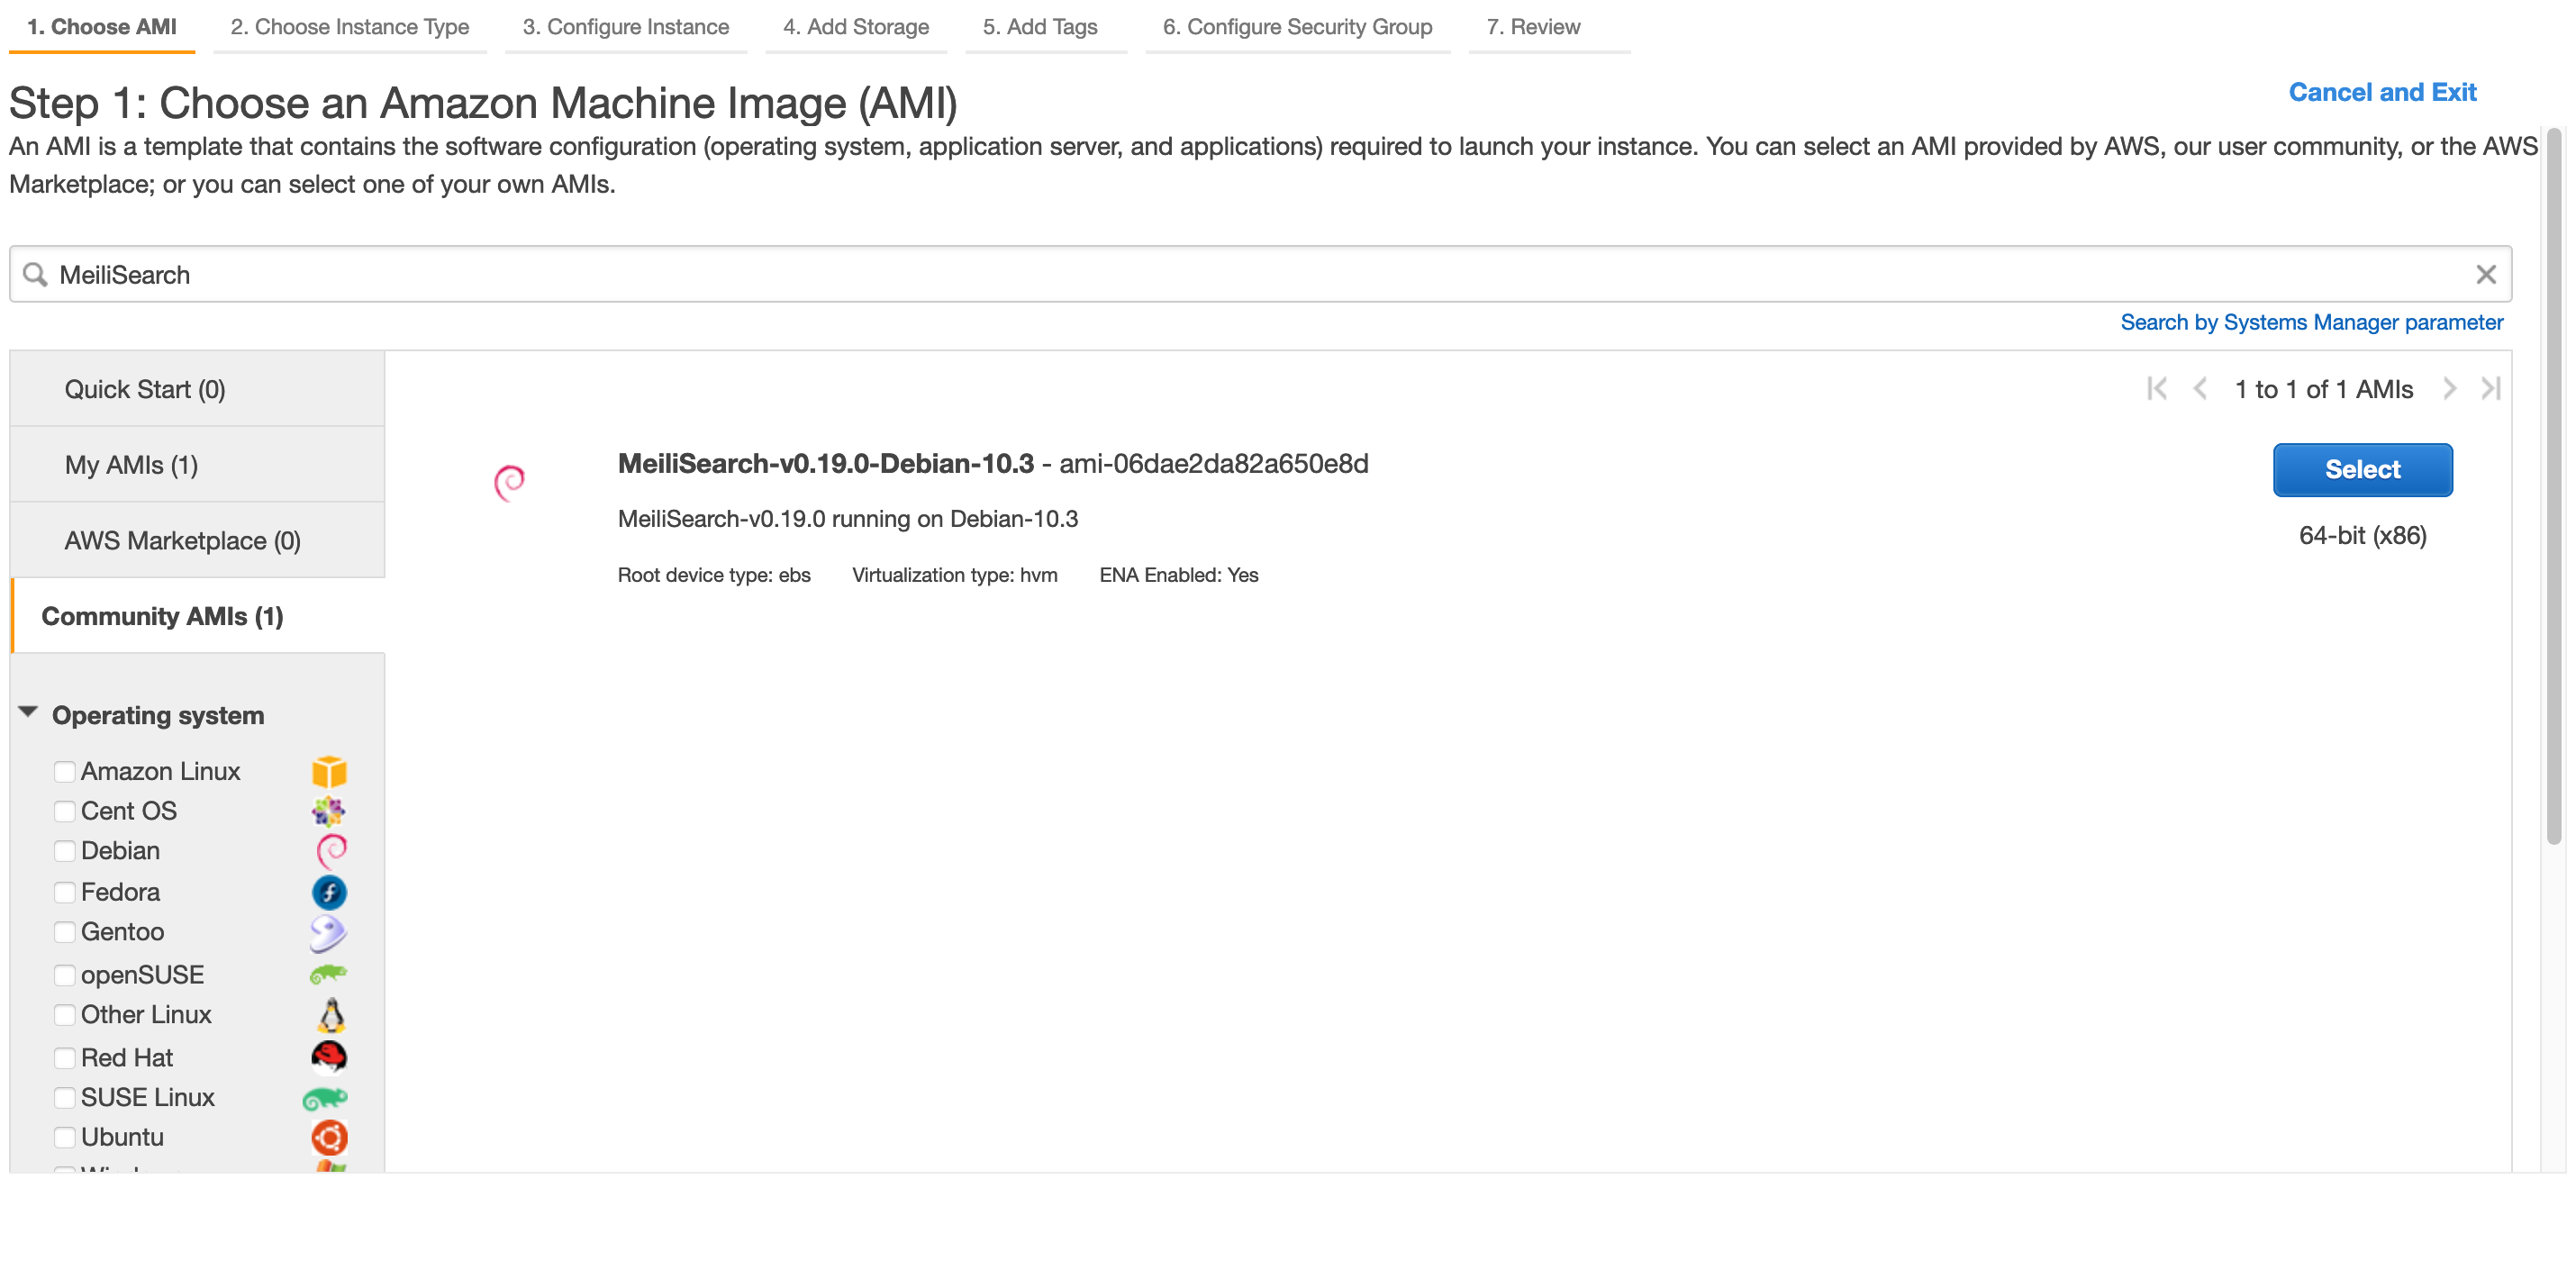 Page titled: 'Step 1: Choose an Amazon Machine Image (AMI)'